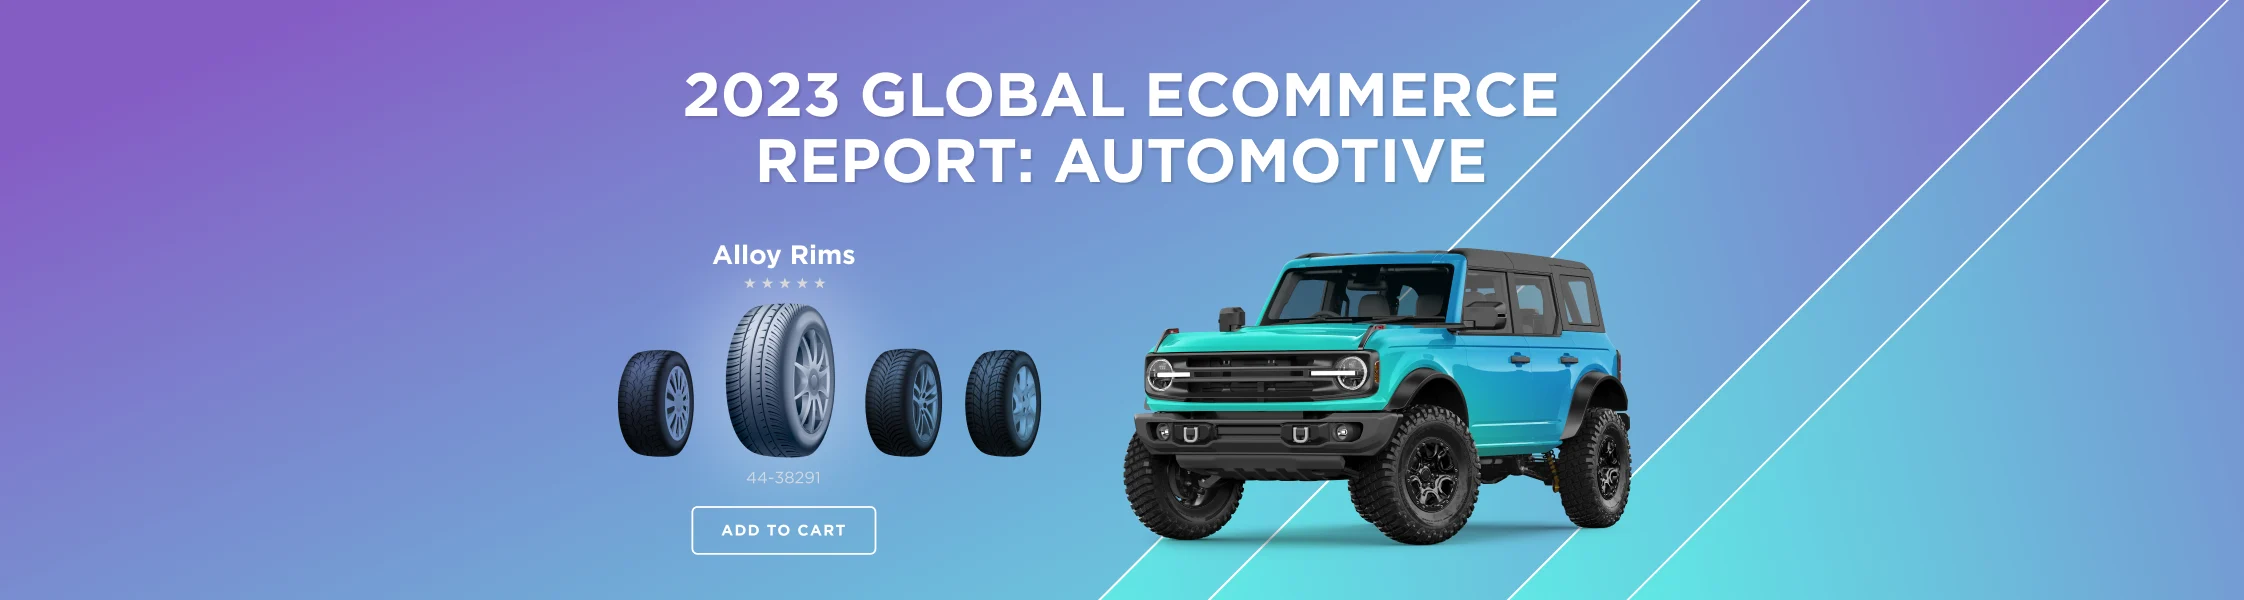 https://www-cdn.bigcommerce.com/assets/blog-hero-header-blog-2023-global-ecommerce-report-automotive.png